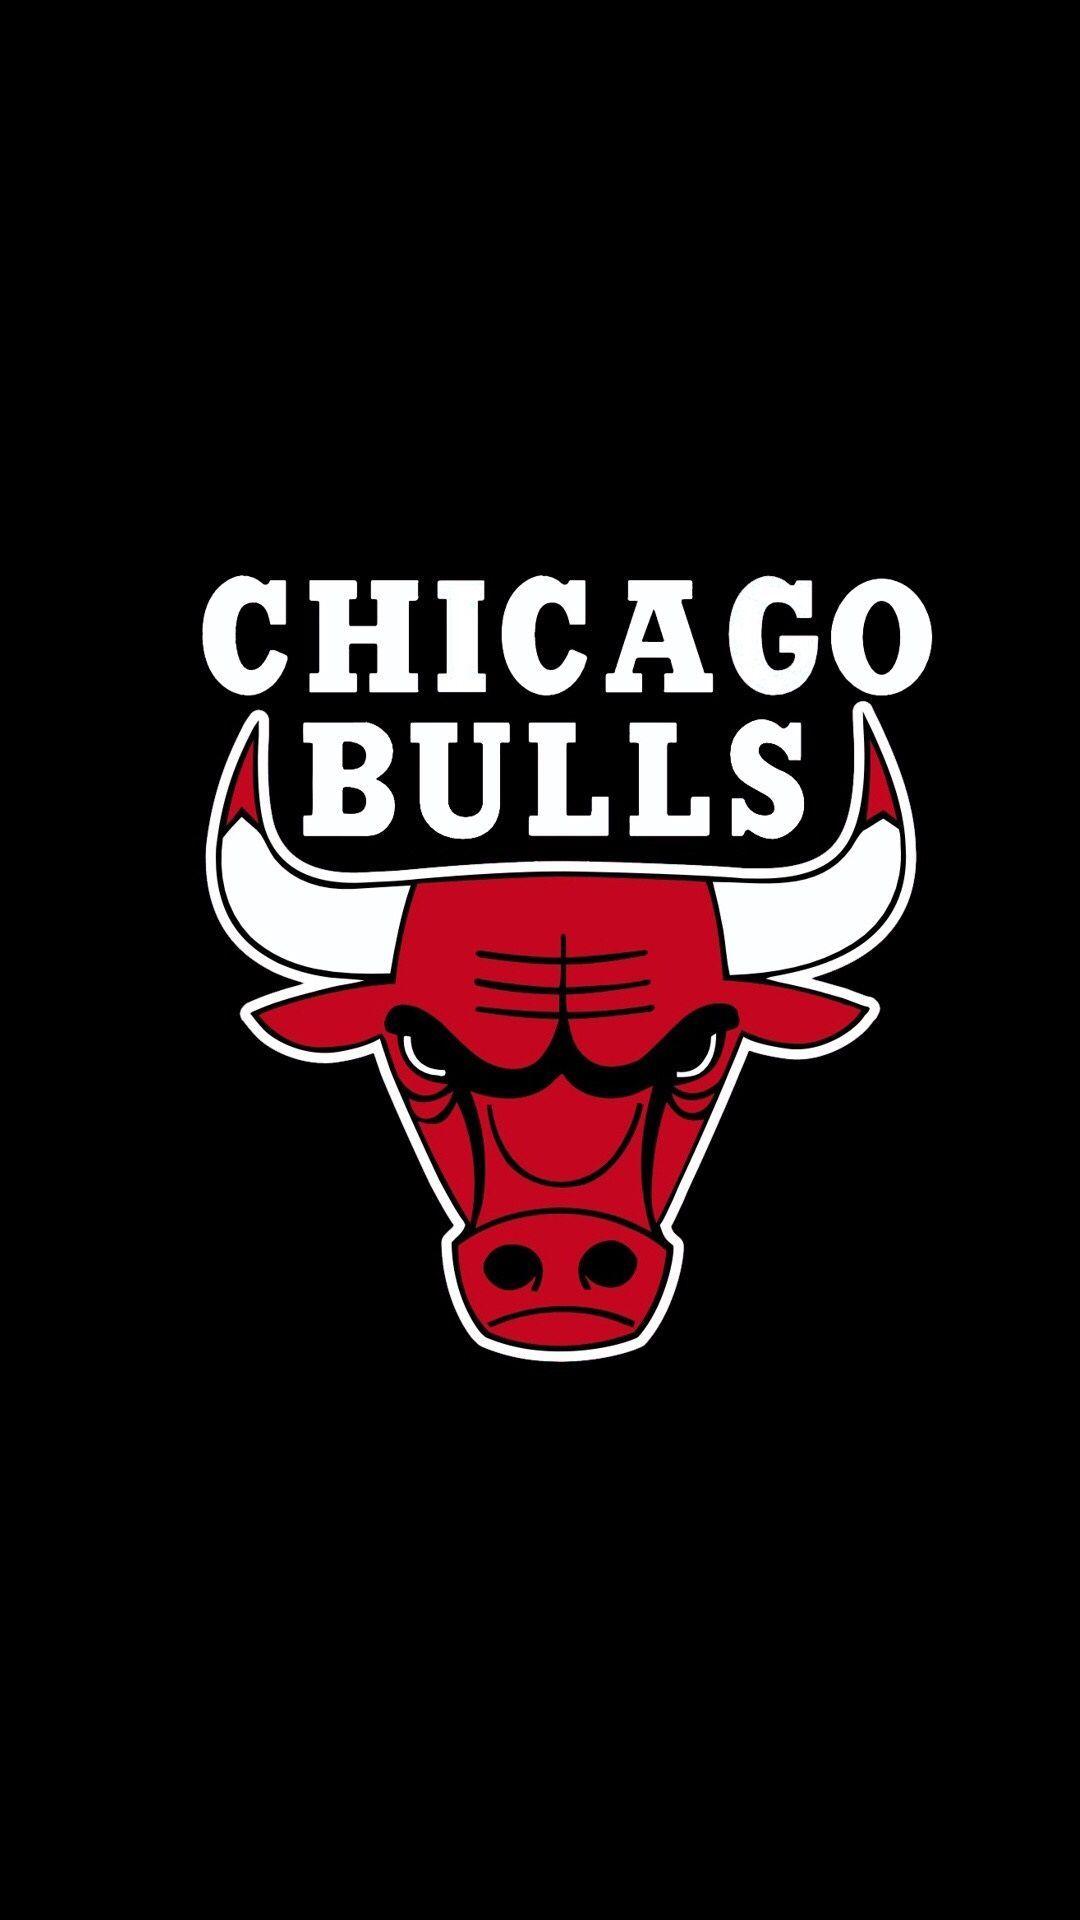 Dope Bulls Logo - 90s Bulls Dynasty 93 / 98